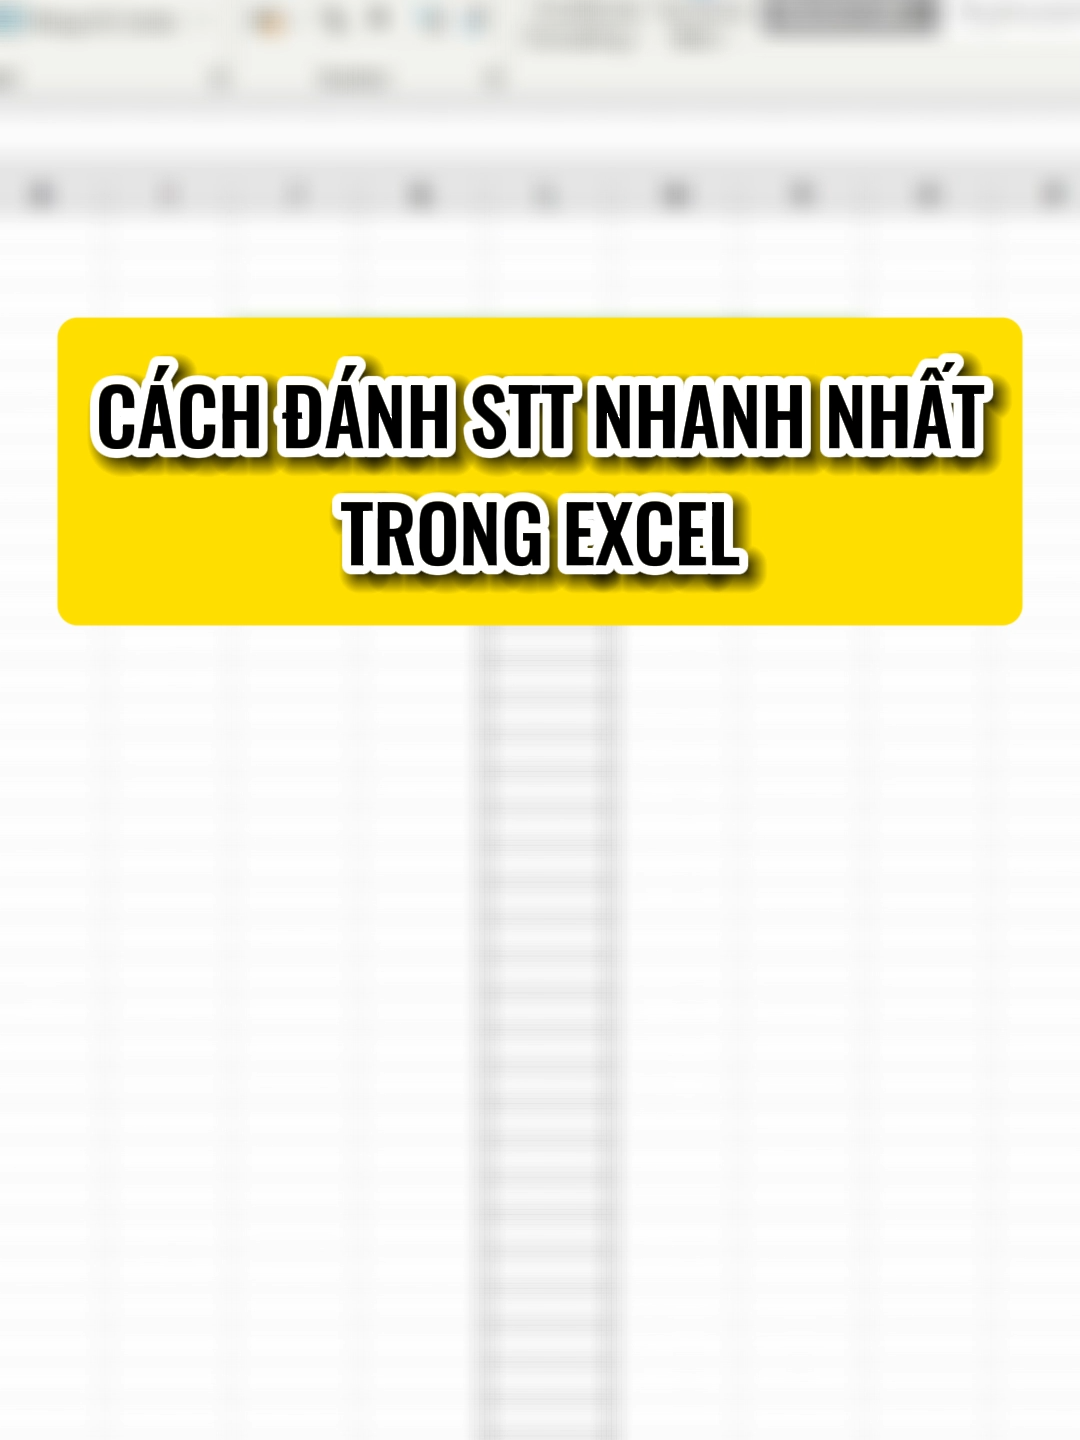 CÁCH ĐÁNH STT NHANH NHẤT TRONG EXCEL #excel #exceltips #exceltricks #tinhocvanphong #meotinhoc